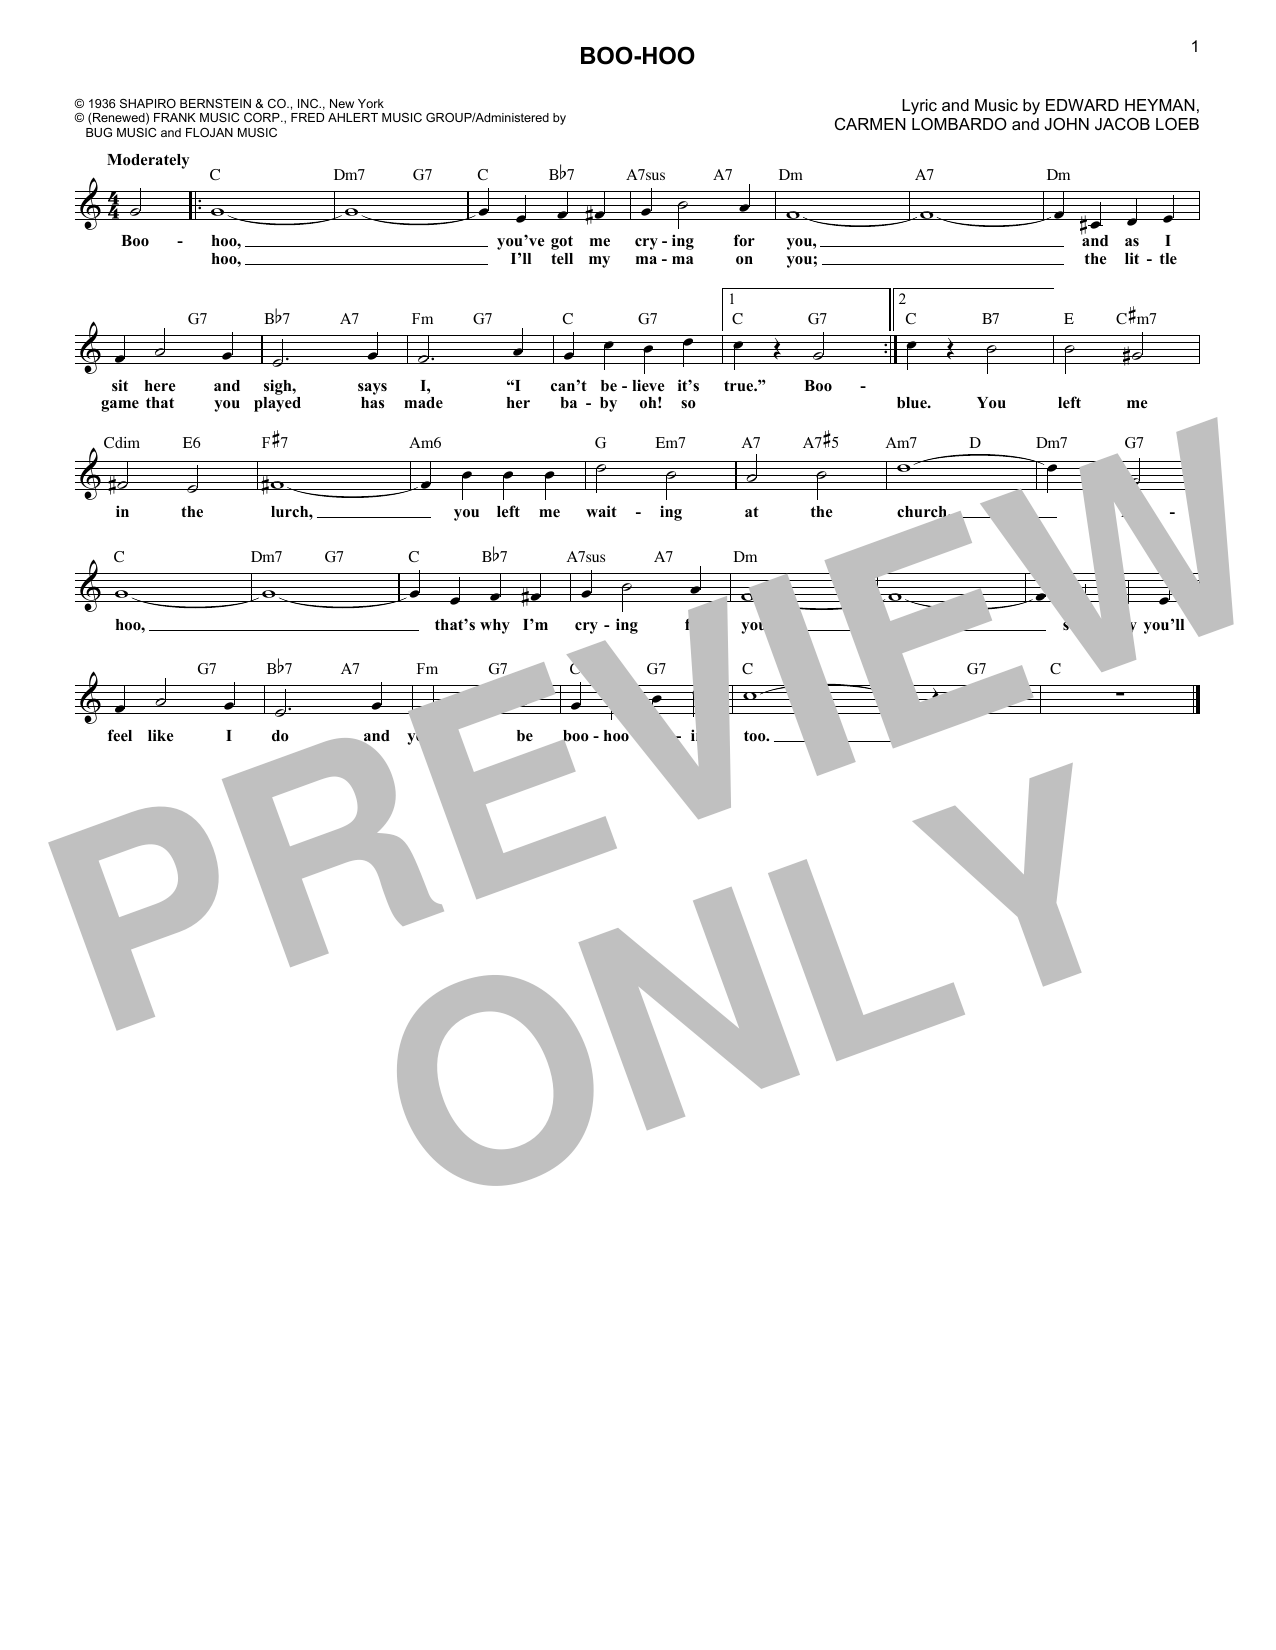 Edward Heyman Boo-Hoo sheet music notes and chords arranged for Lead Sheet / Fake Book